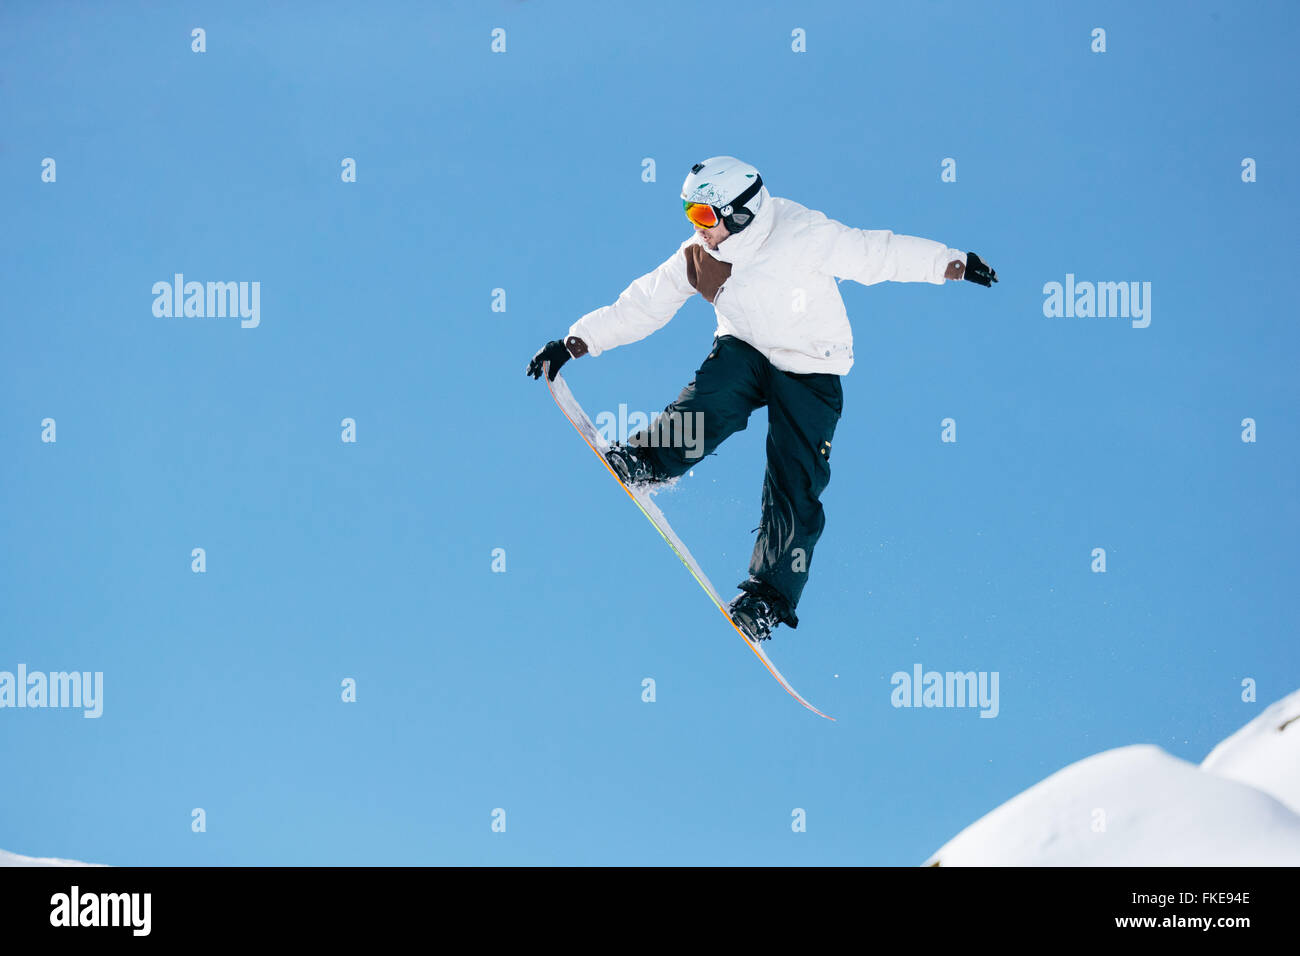 A snowboarder flies through the air against clear blue sky. Stock Photo